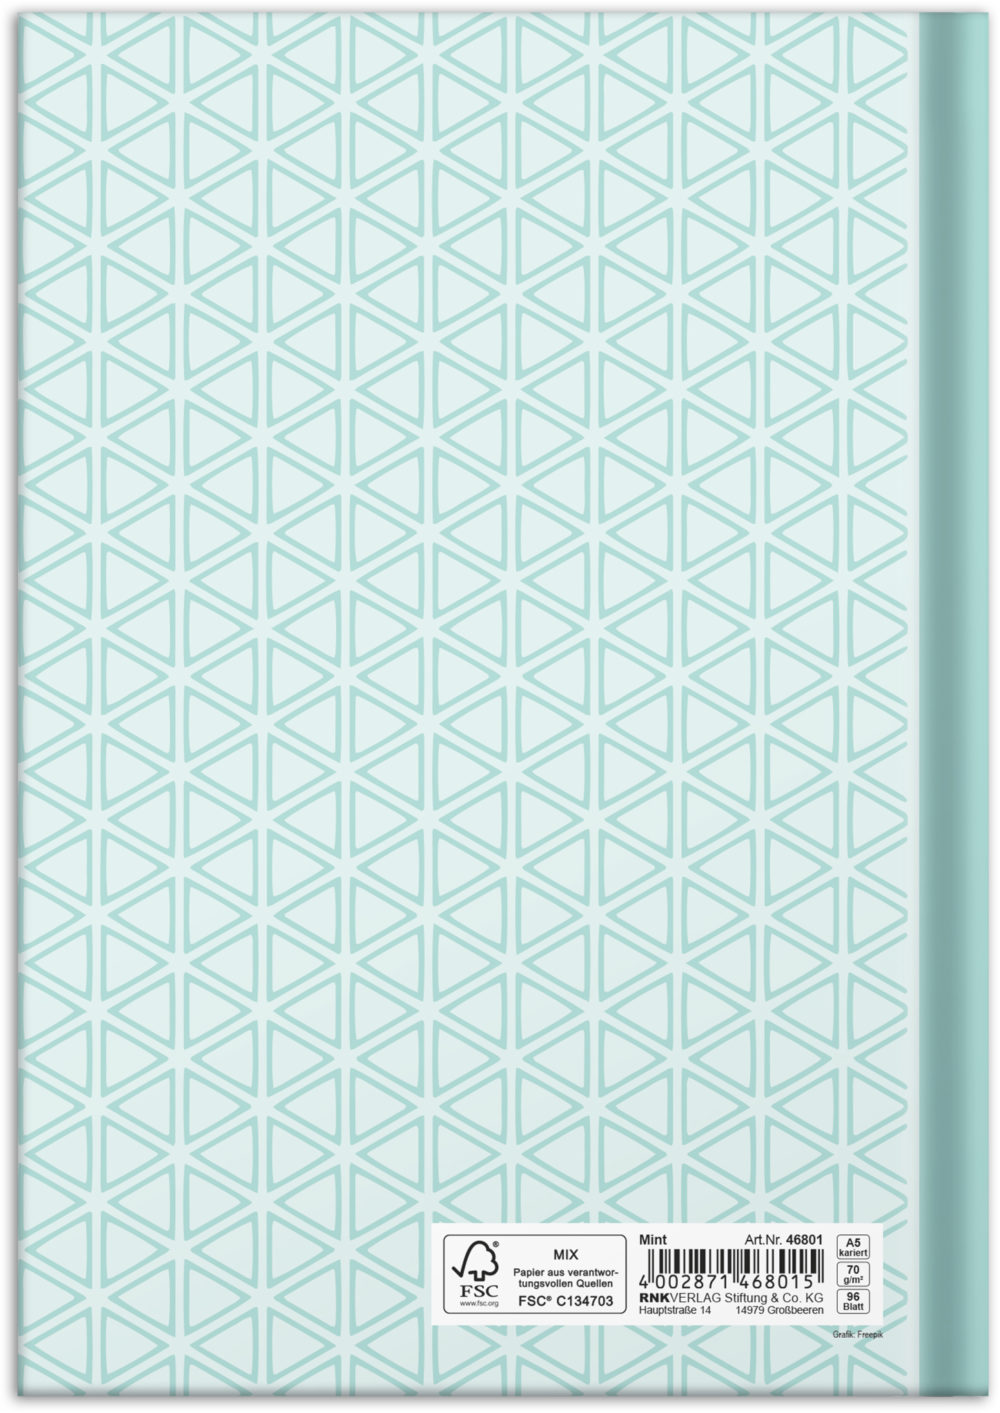 Notizbuch "Mint" Rückseite mit Muster